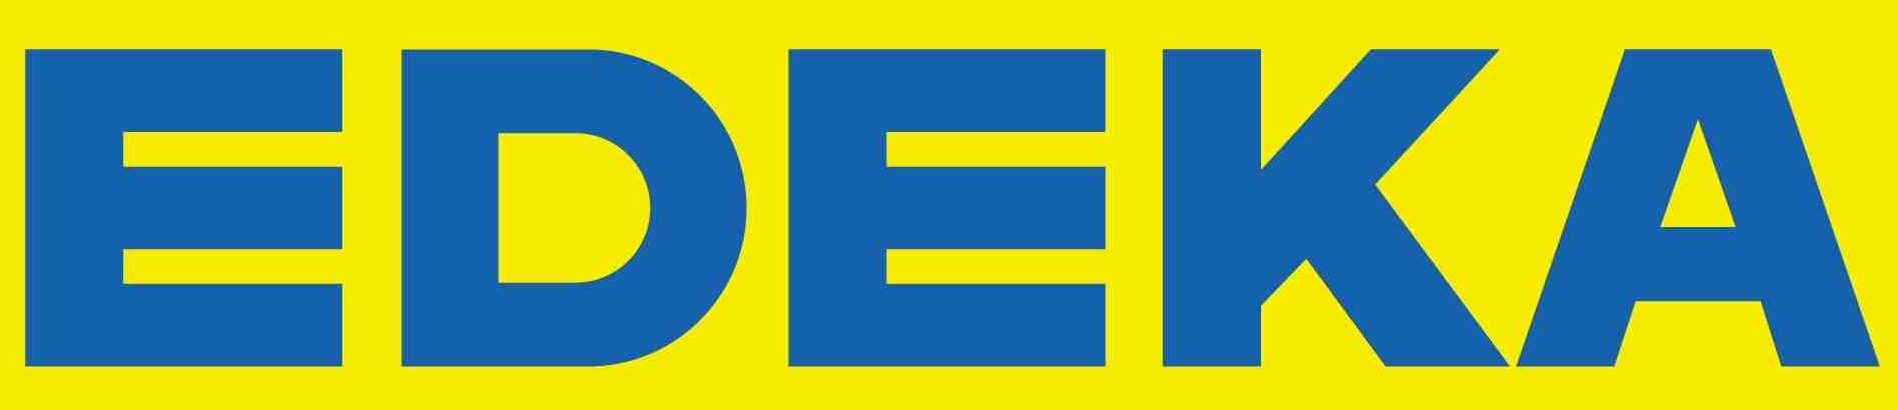 EDEKA 1960 Logo. Format: EPS